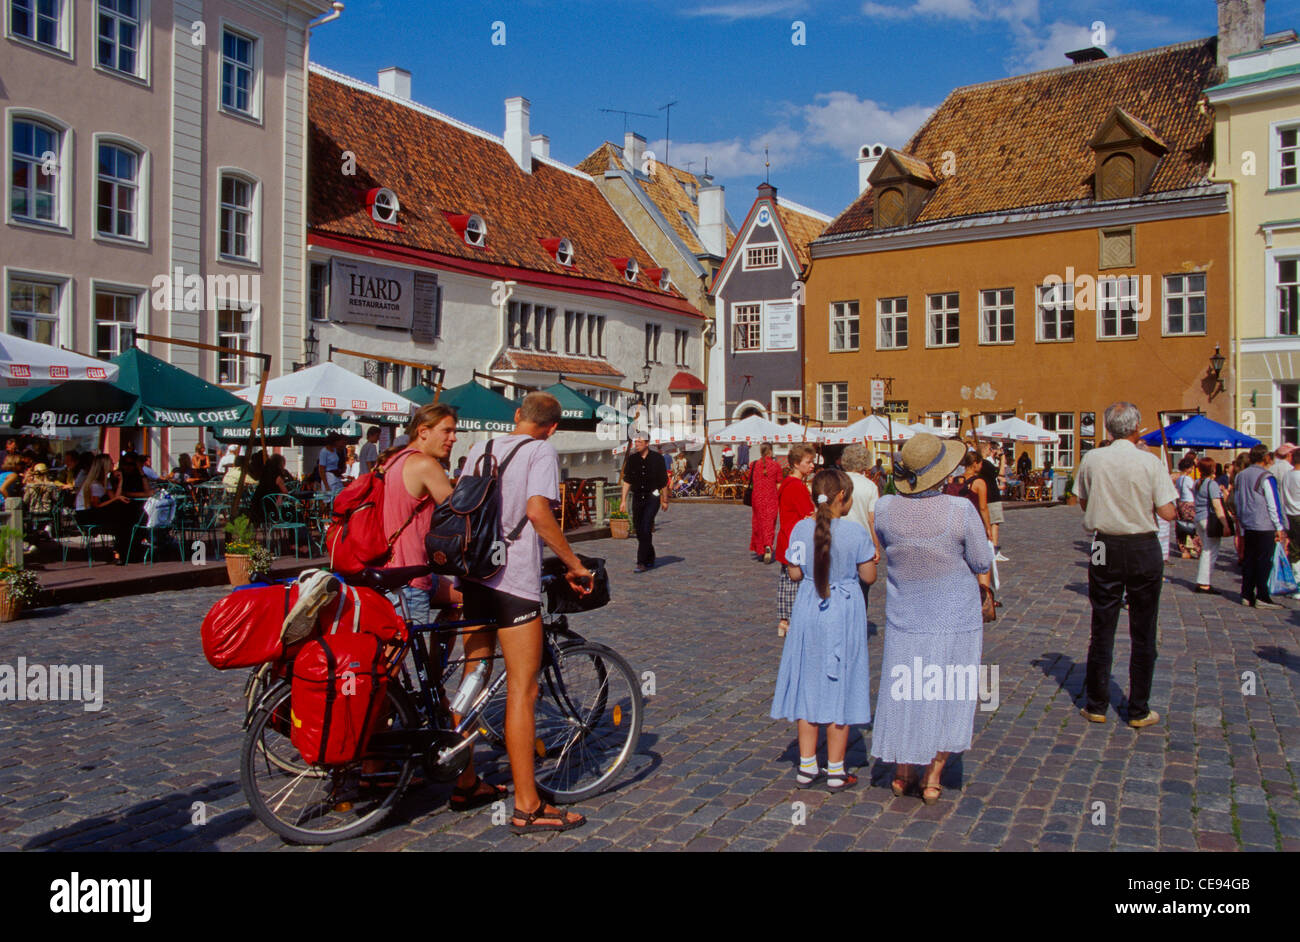 Market Square in Tallinn Stock Photo